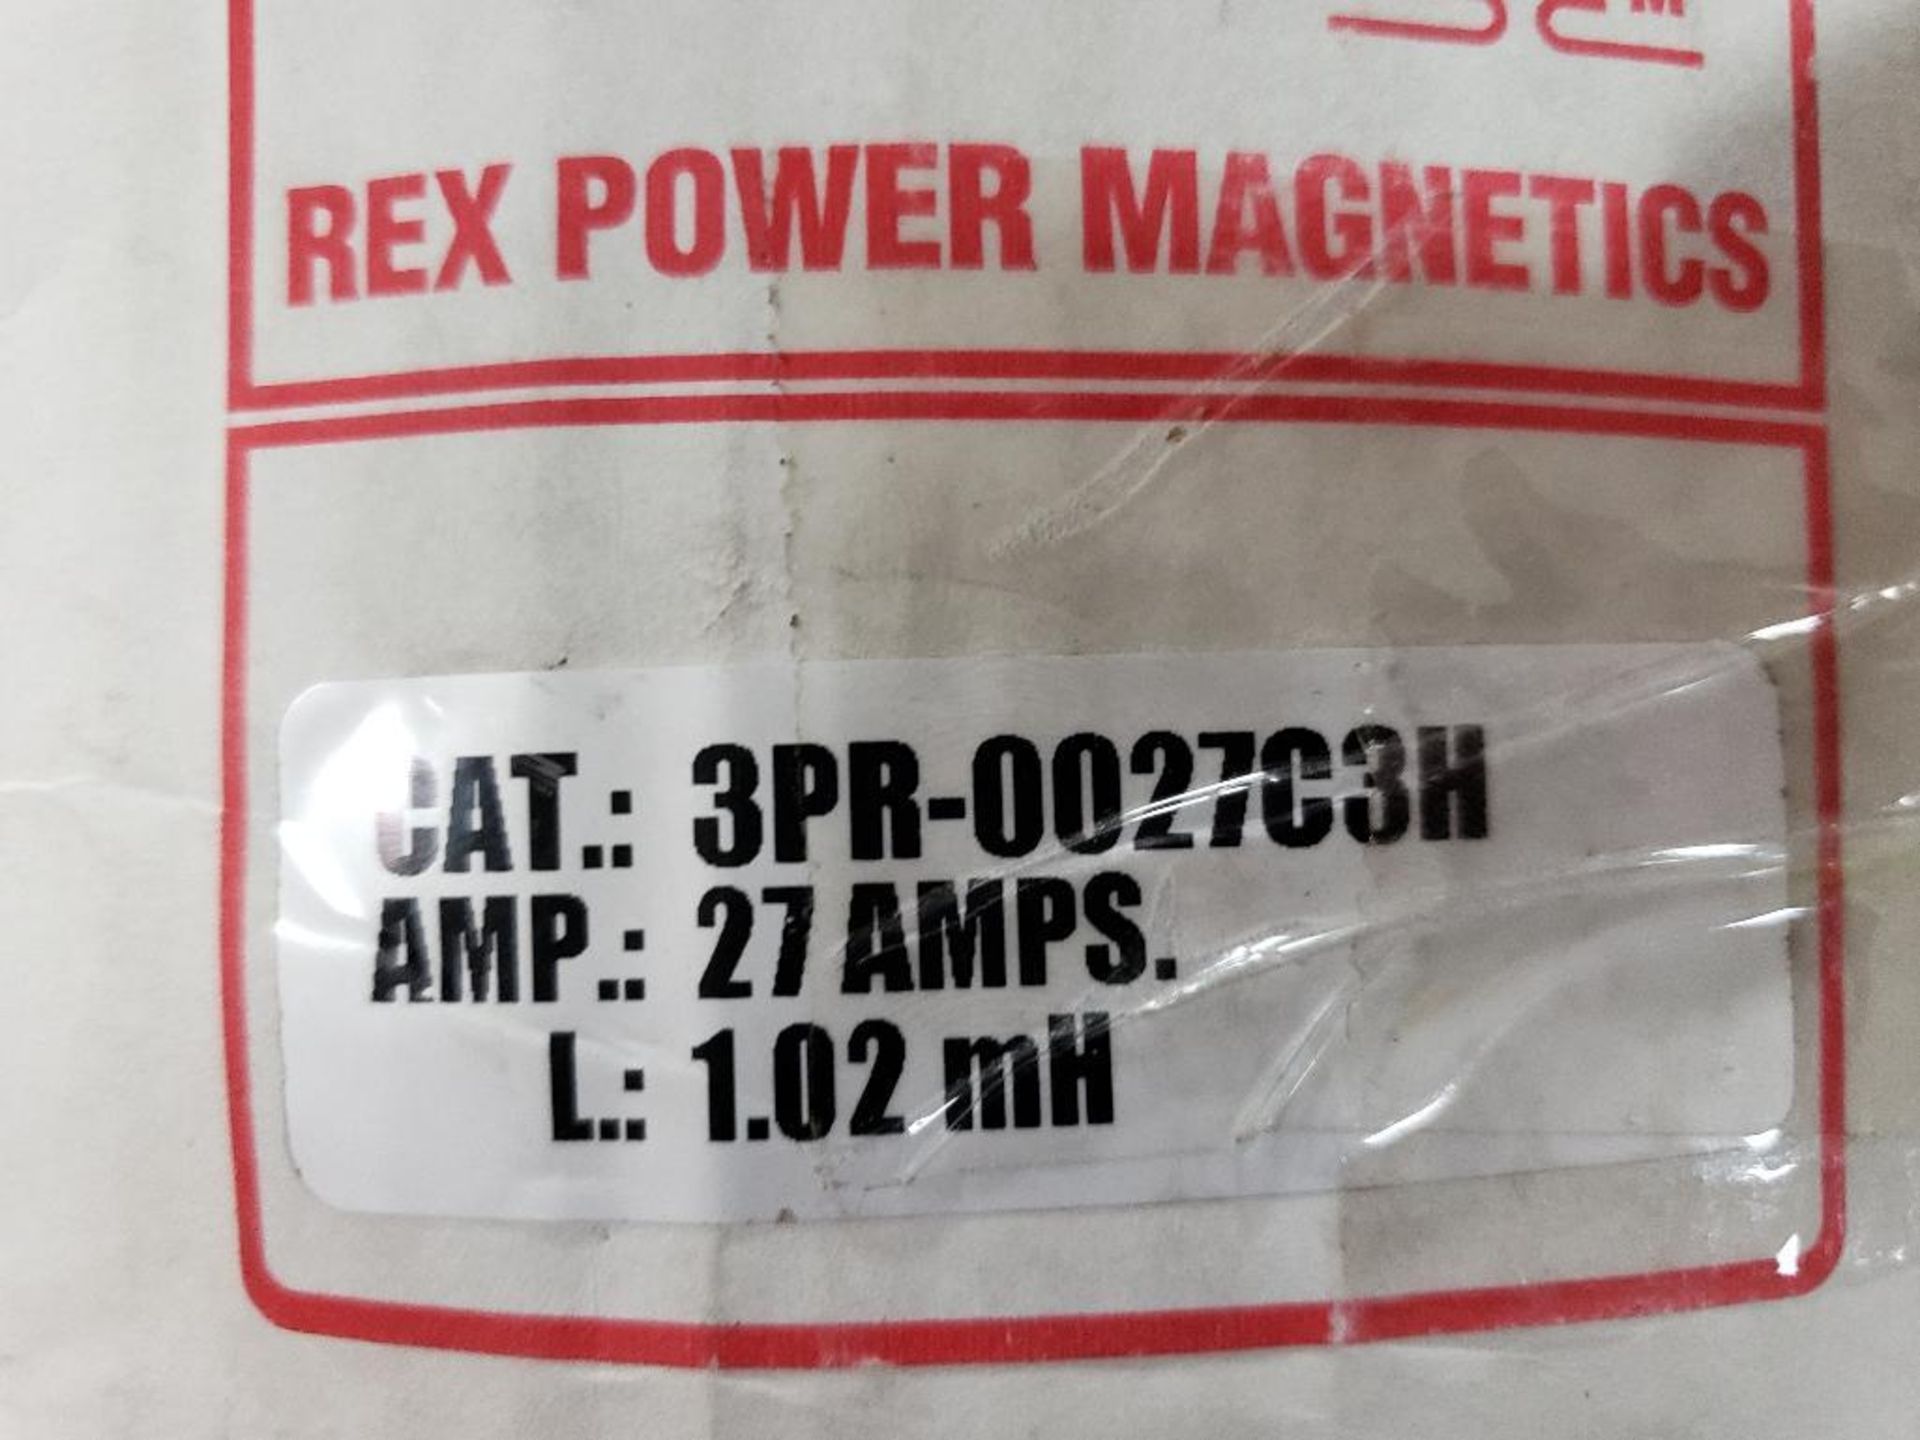 Rex Power Magnetics 3PR-0027C3M 27AMP, 1.02mH. - Image 2 of 3